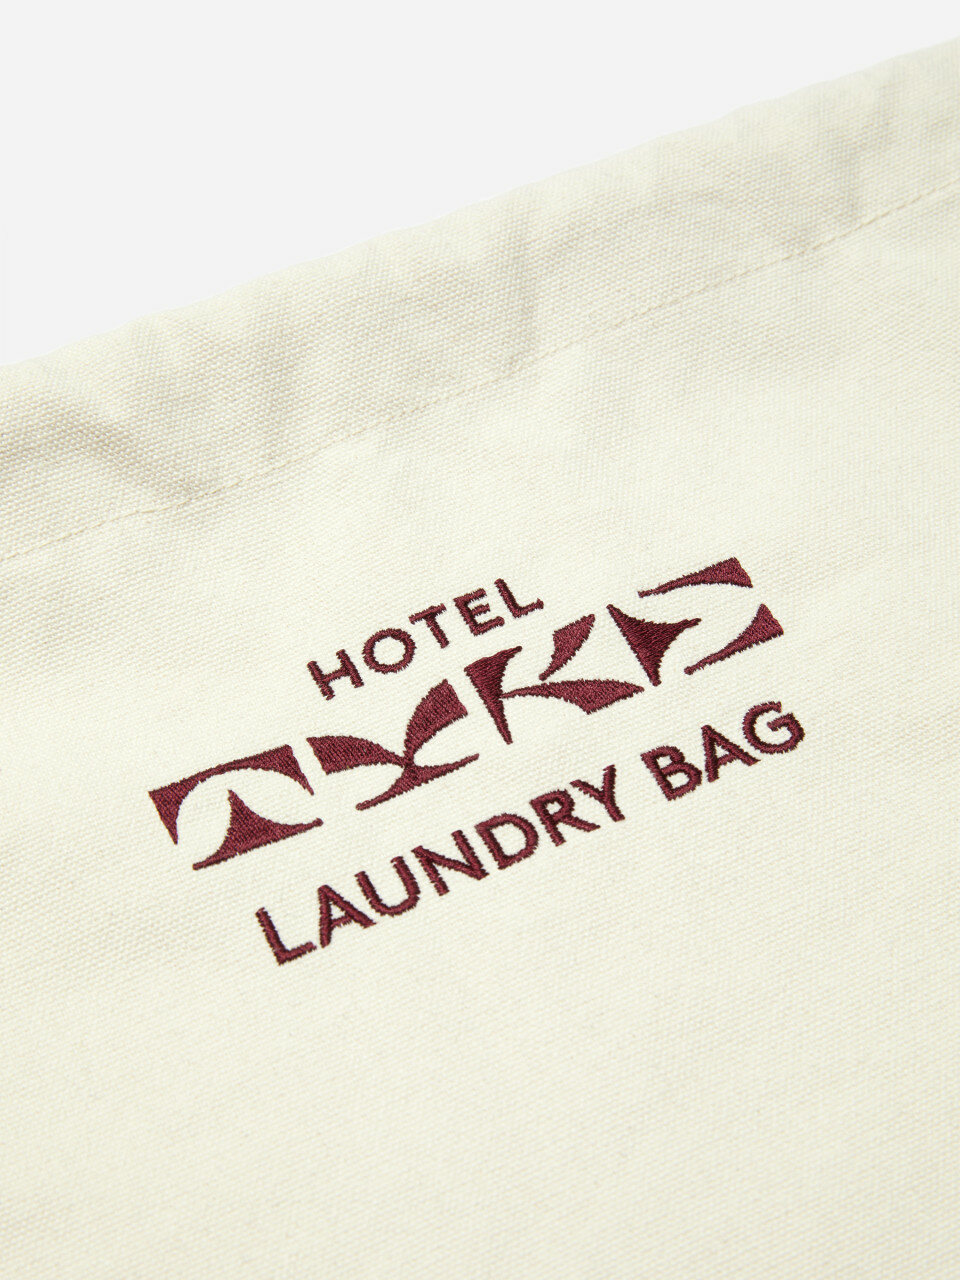 HOTEL TYKE Laundry Bag 호텔 타이크 런드리백